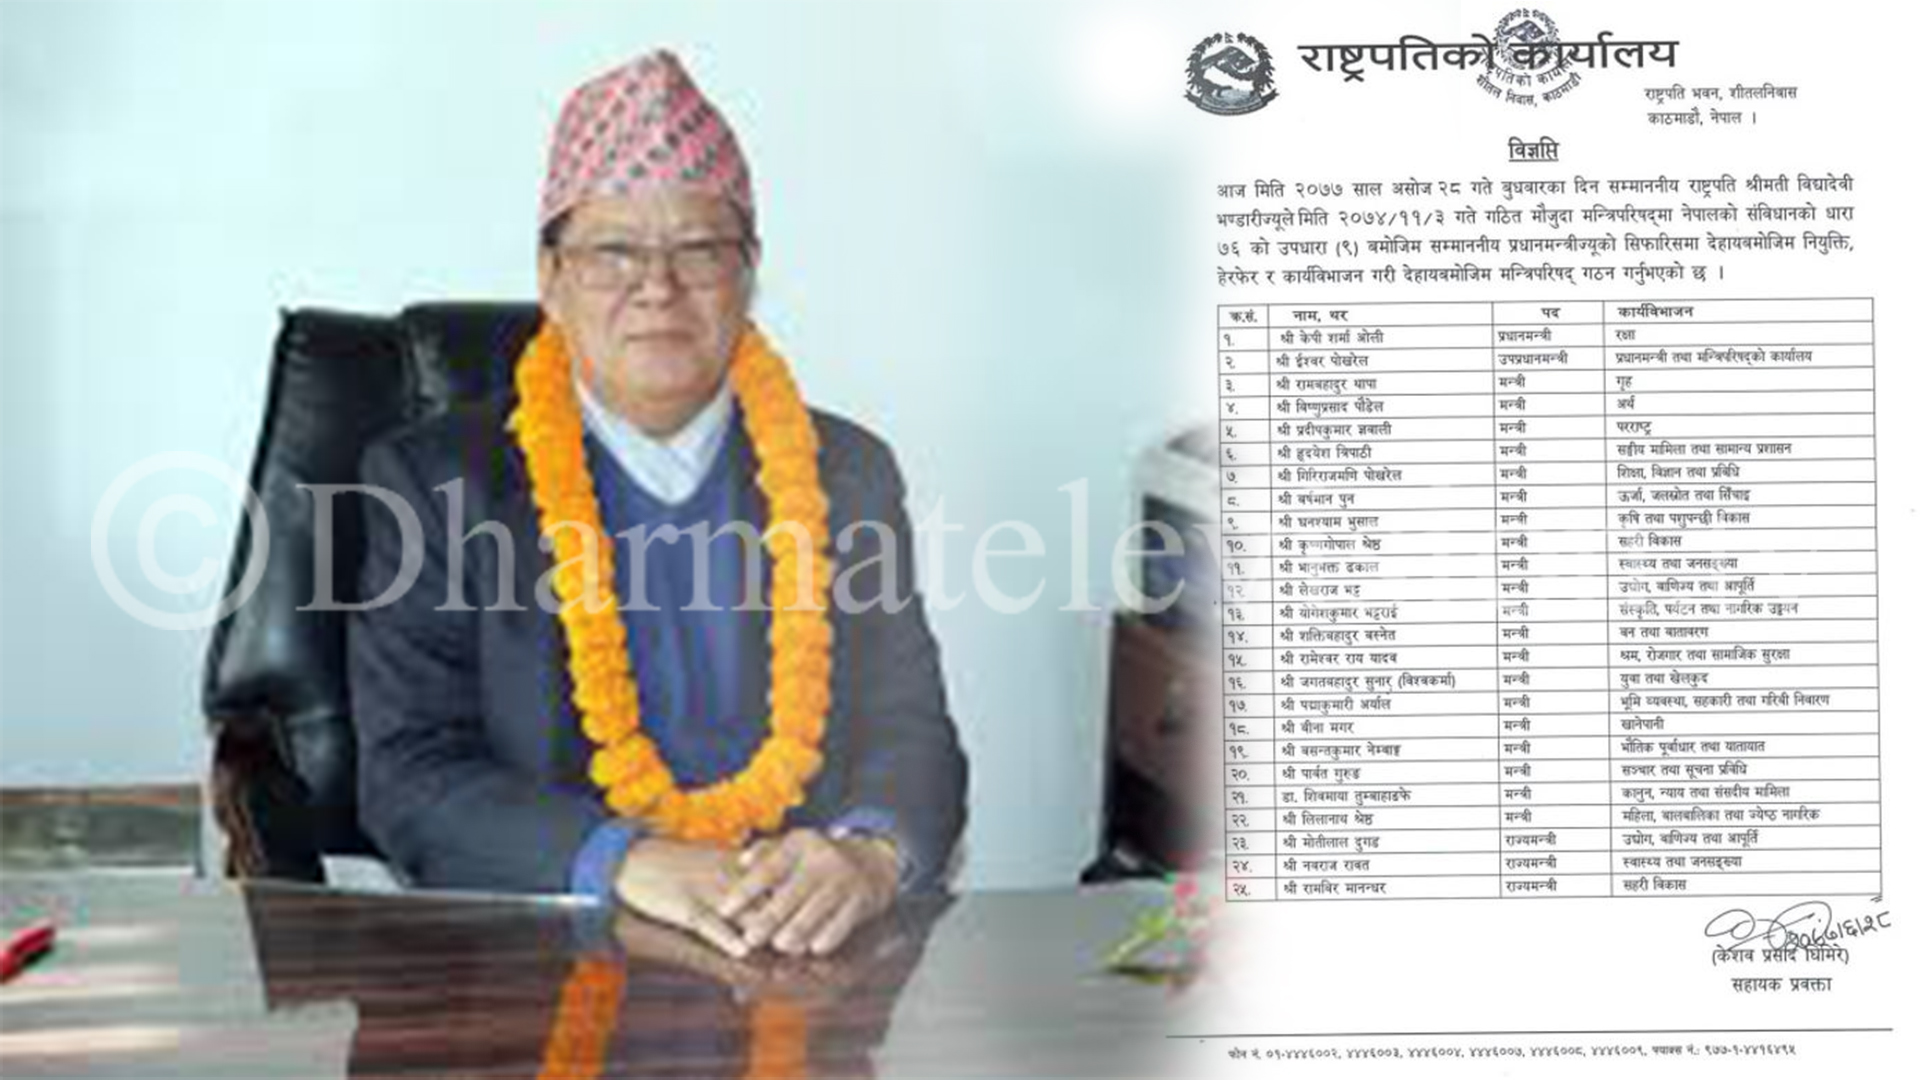 Cabinet reassembling, Gurung as Communication Minister